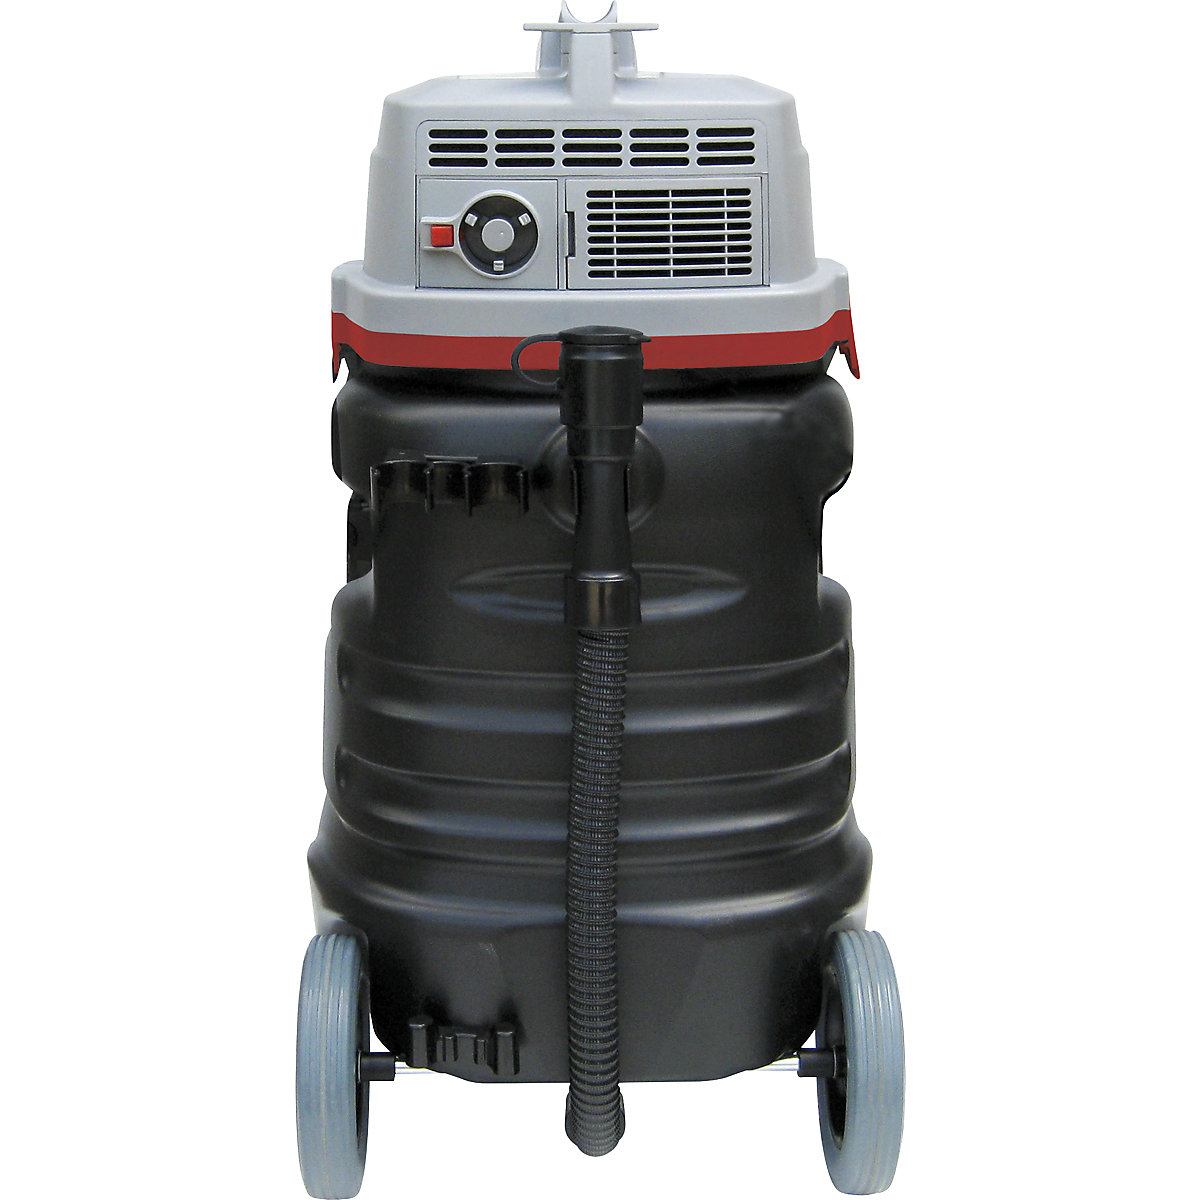 Wet and dry vacuum cleaner – Sprintus